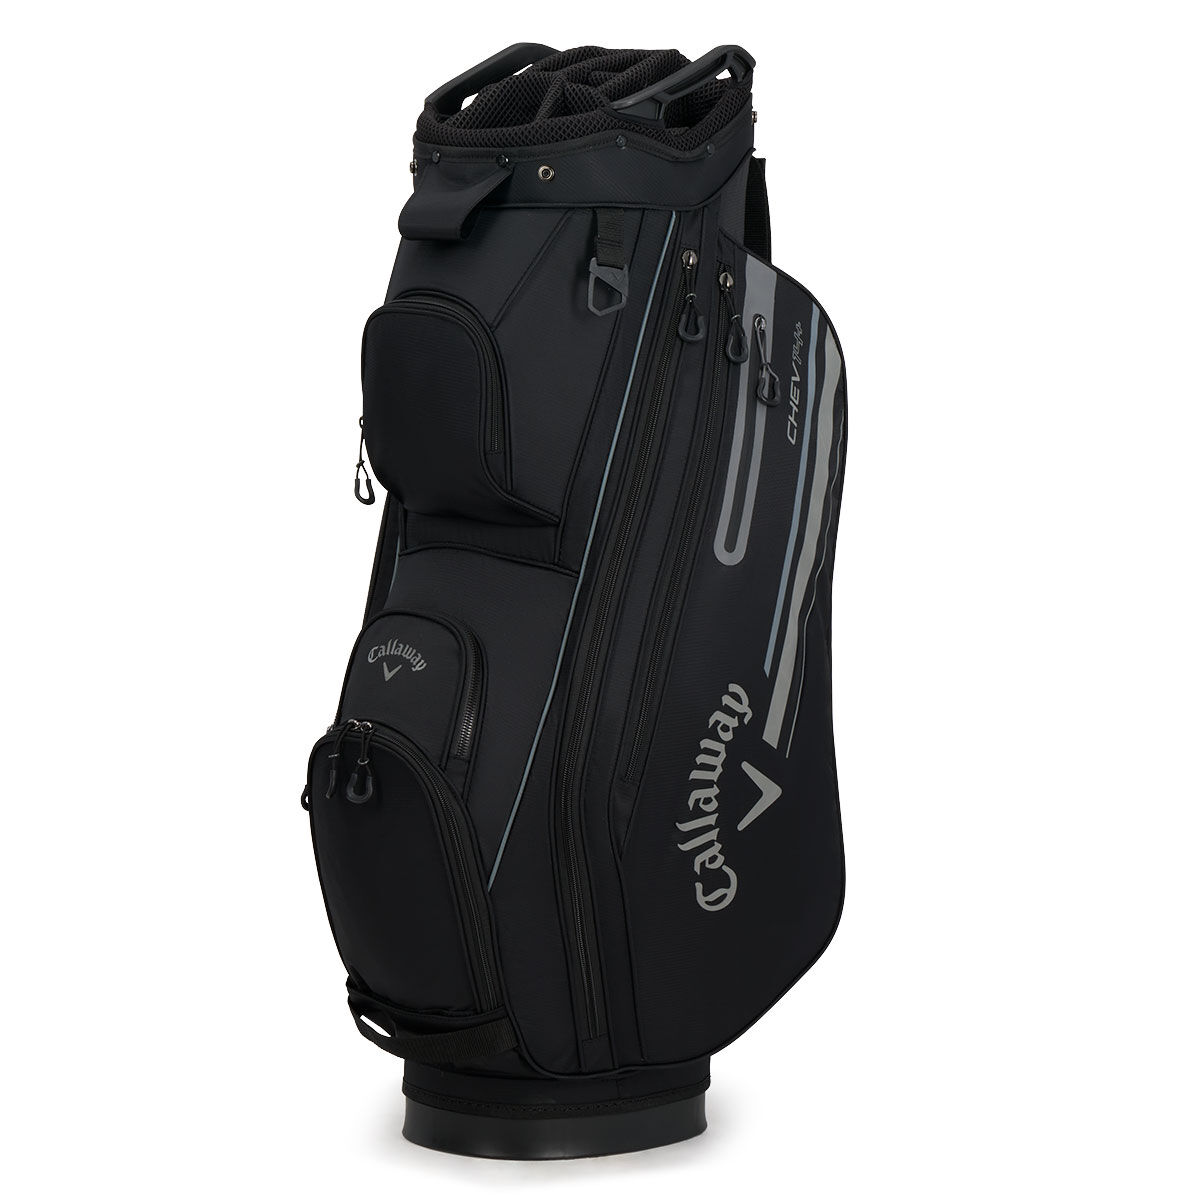 Callaway Chev + Plus Golf Cart Bag, Black, One Size | American Golf von Callaway Golf